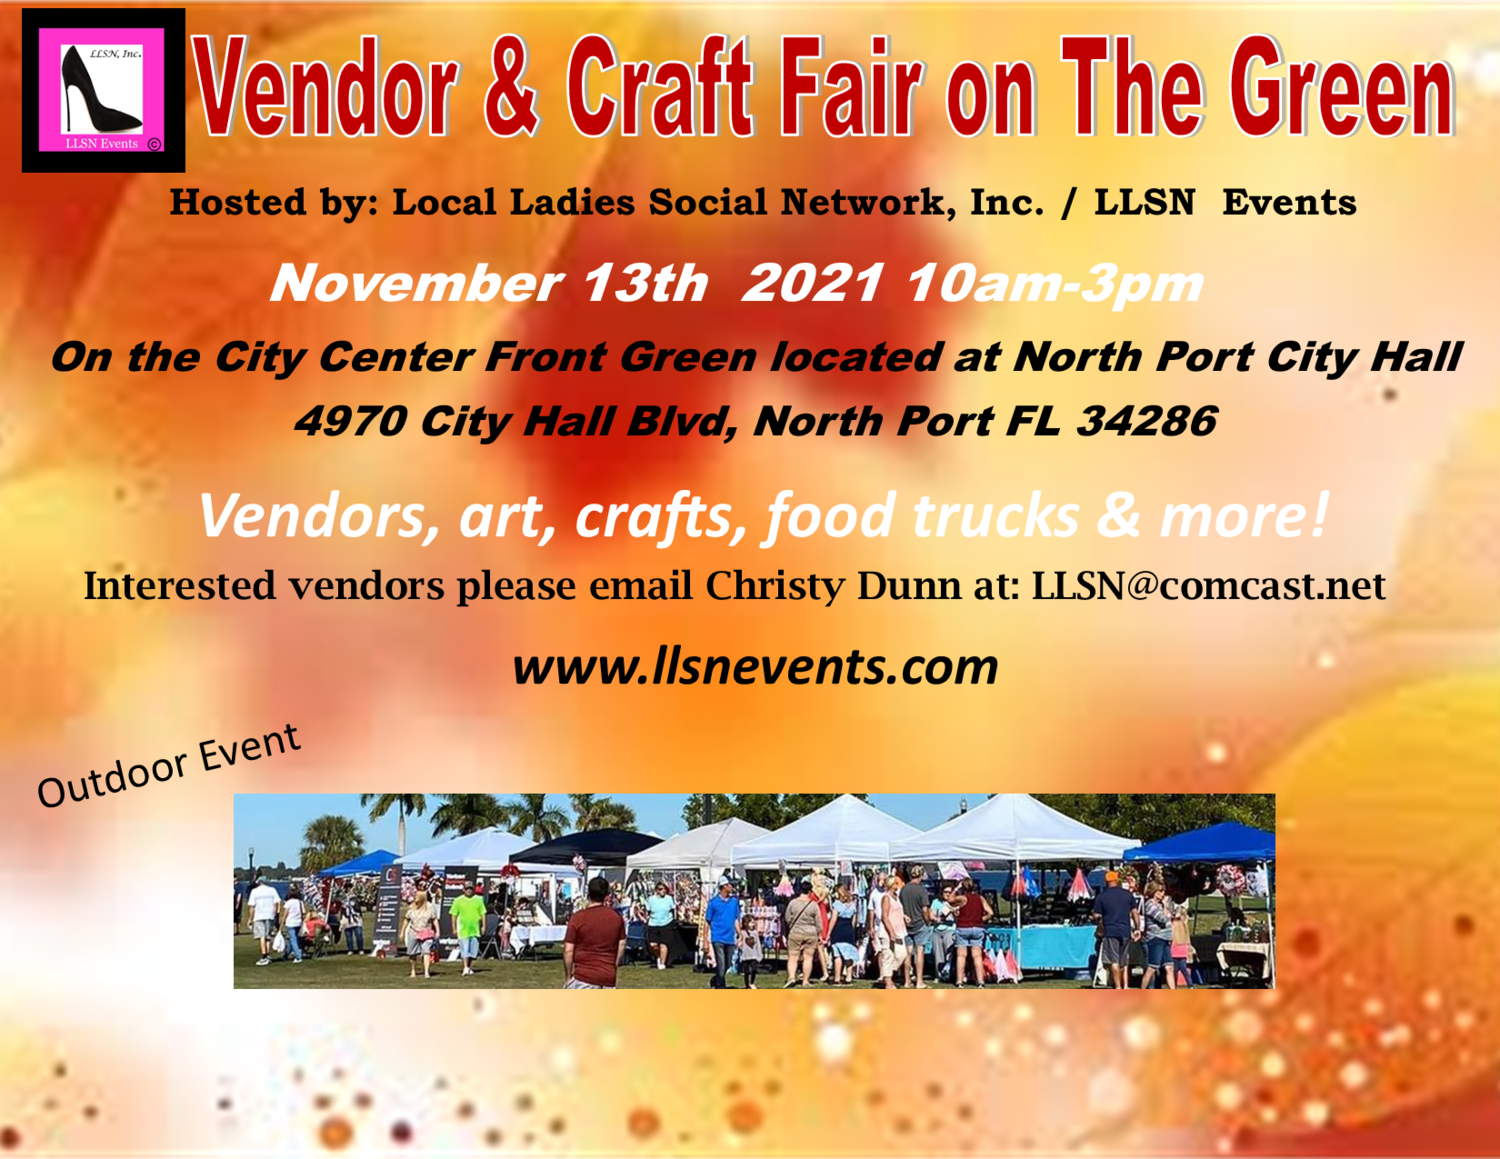 Vendor & Craft Fair on The Green November 13th 2021 North Port